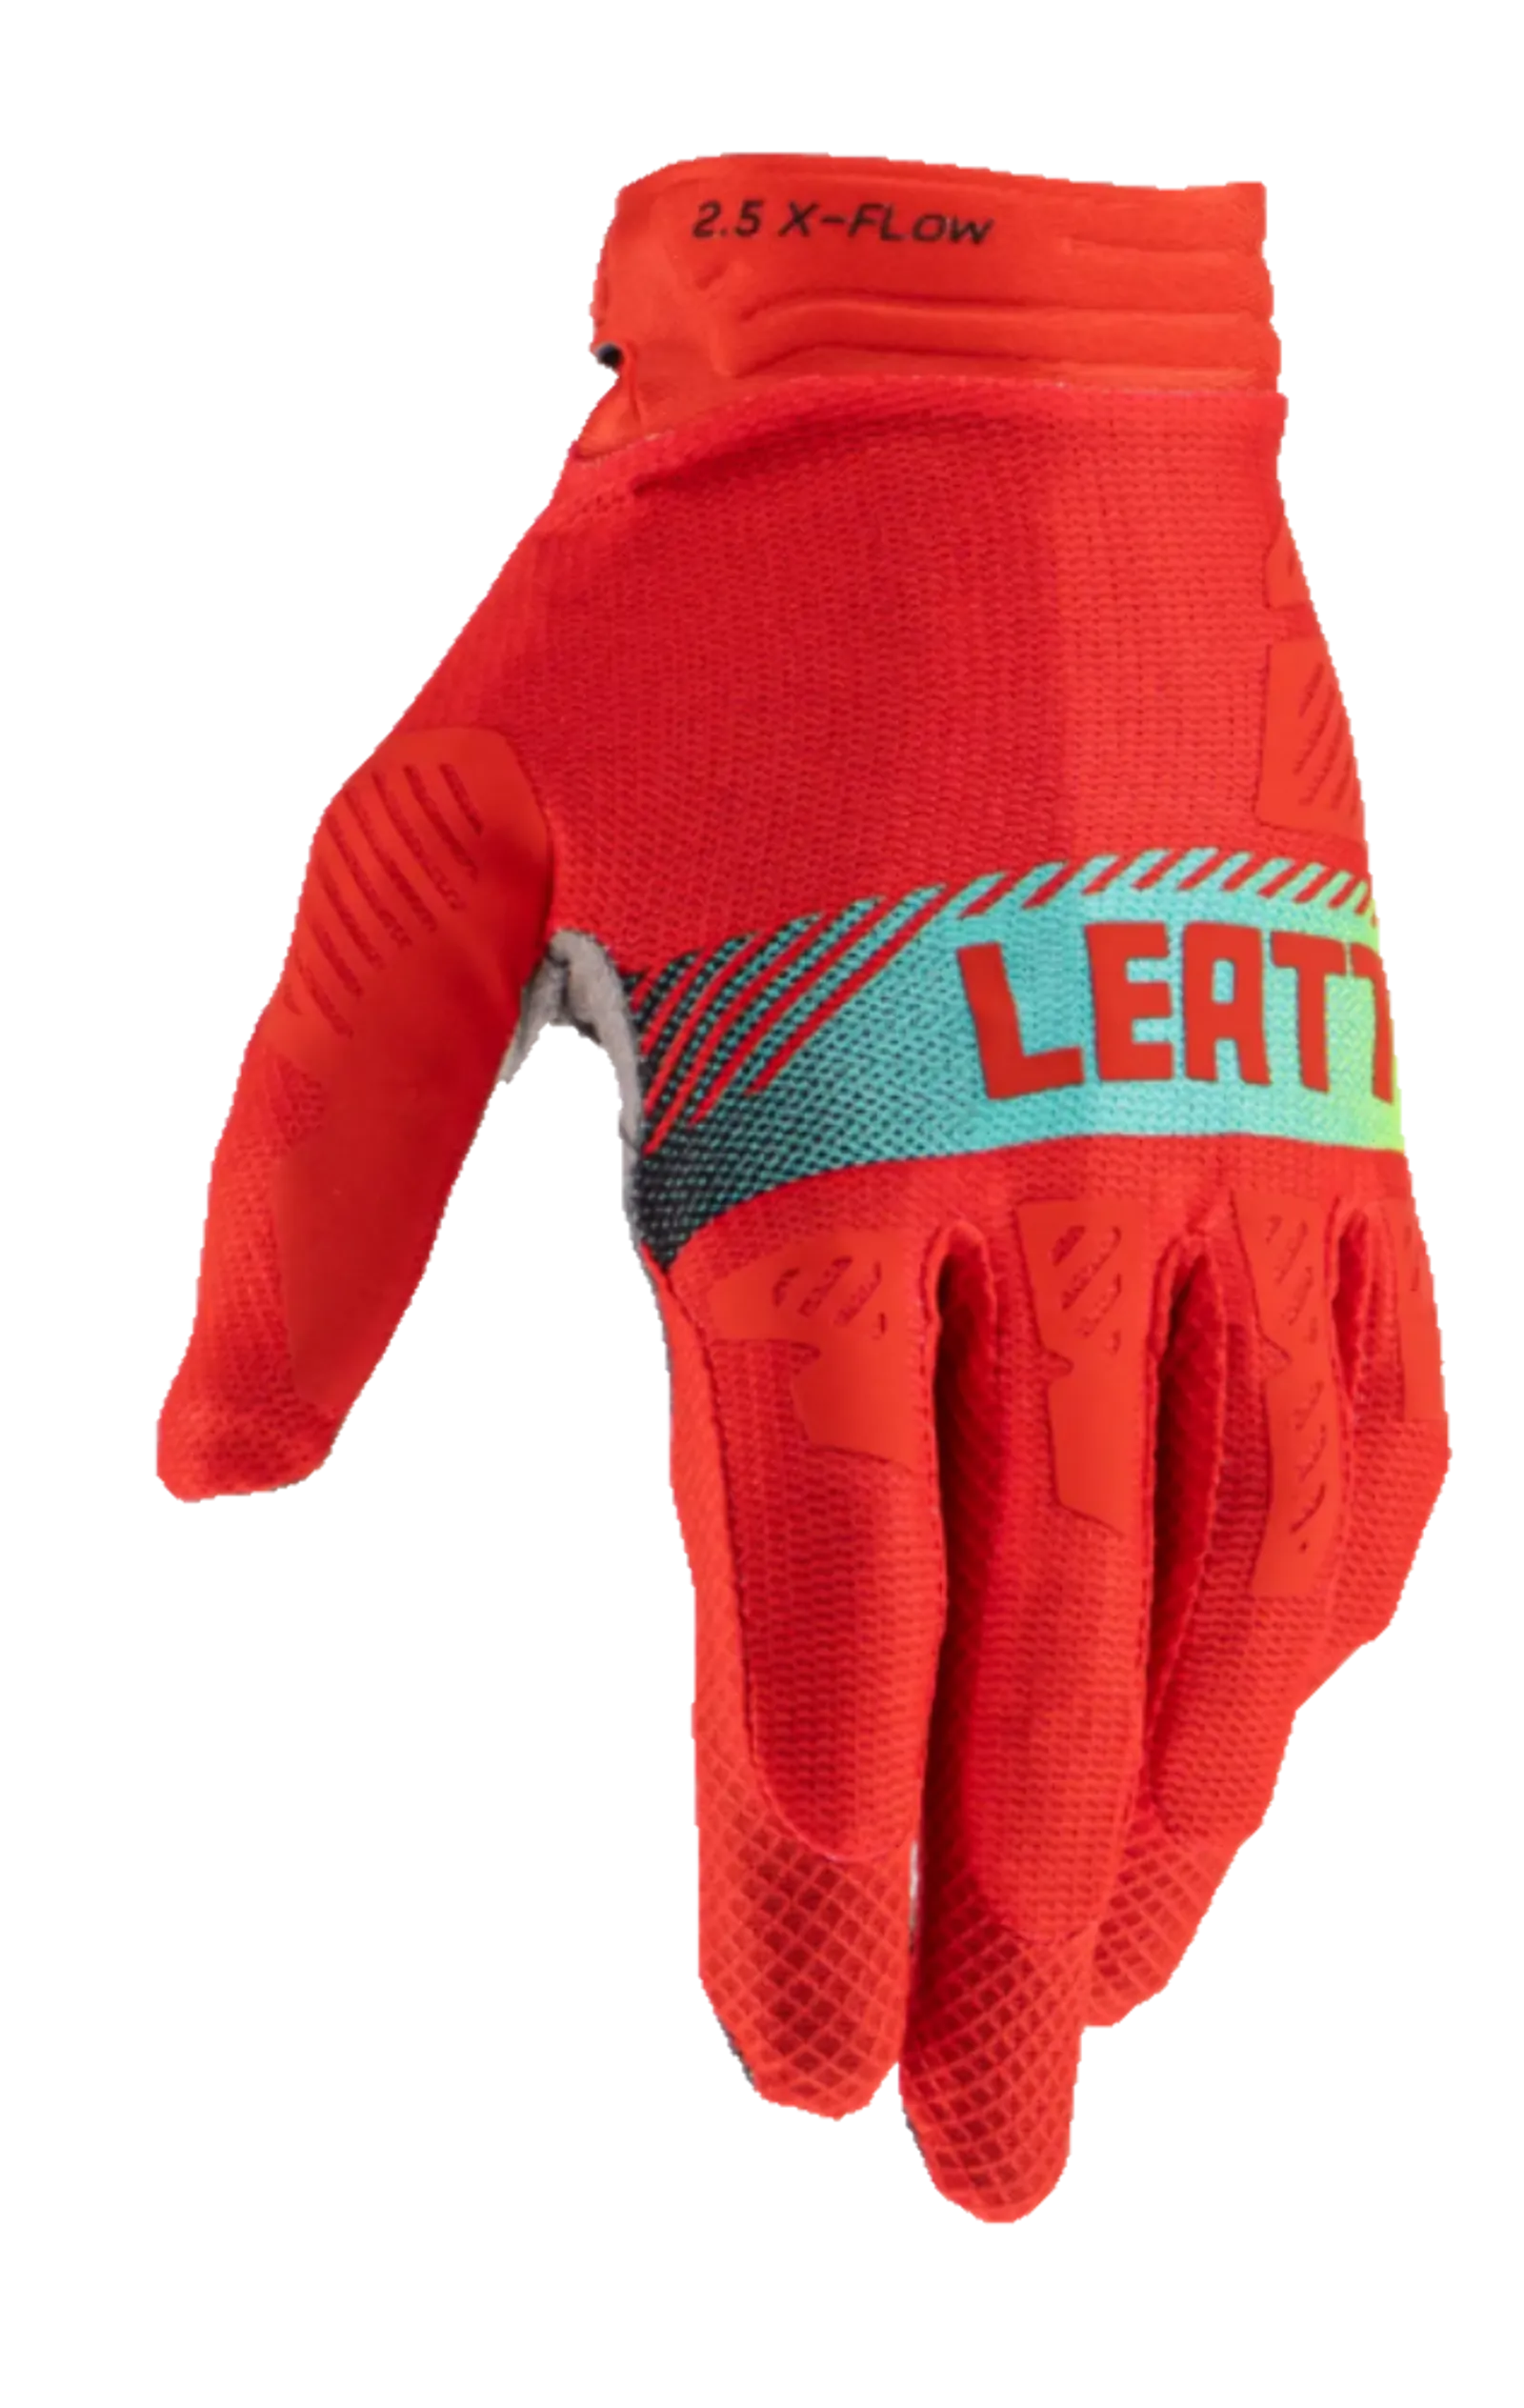 Leatt Glove Moto 2.5 X-Flow Red Adult